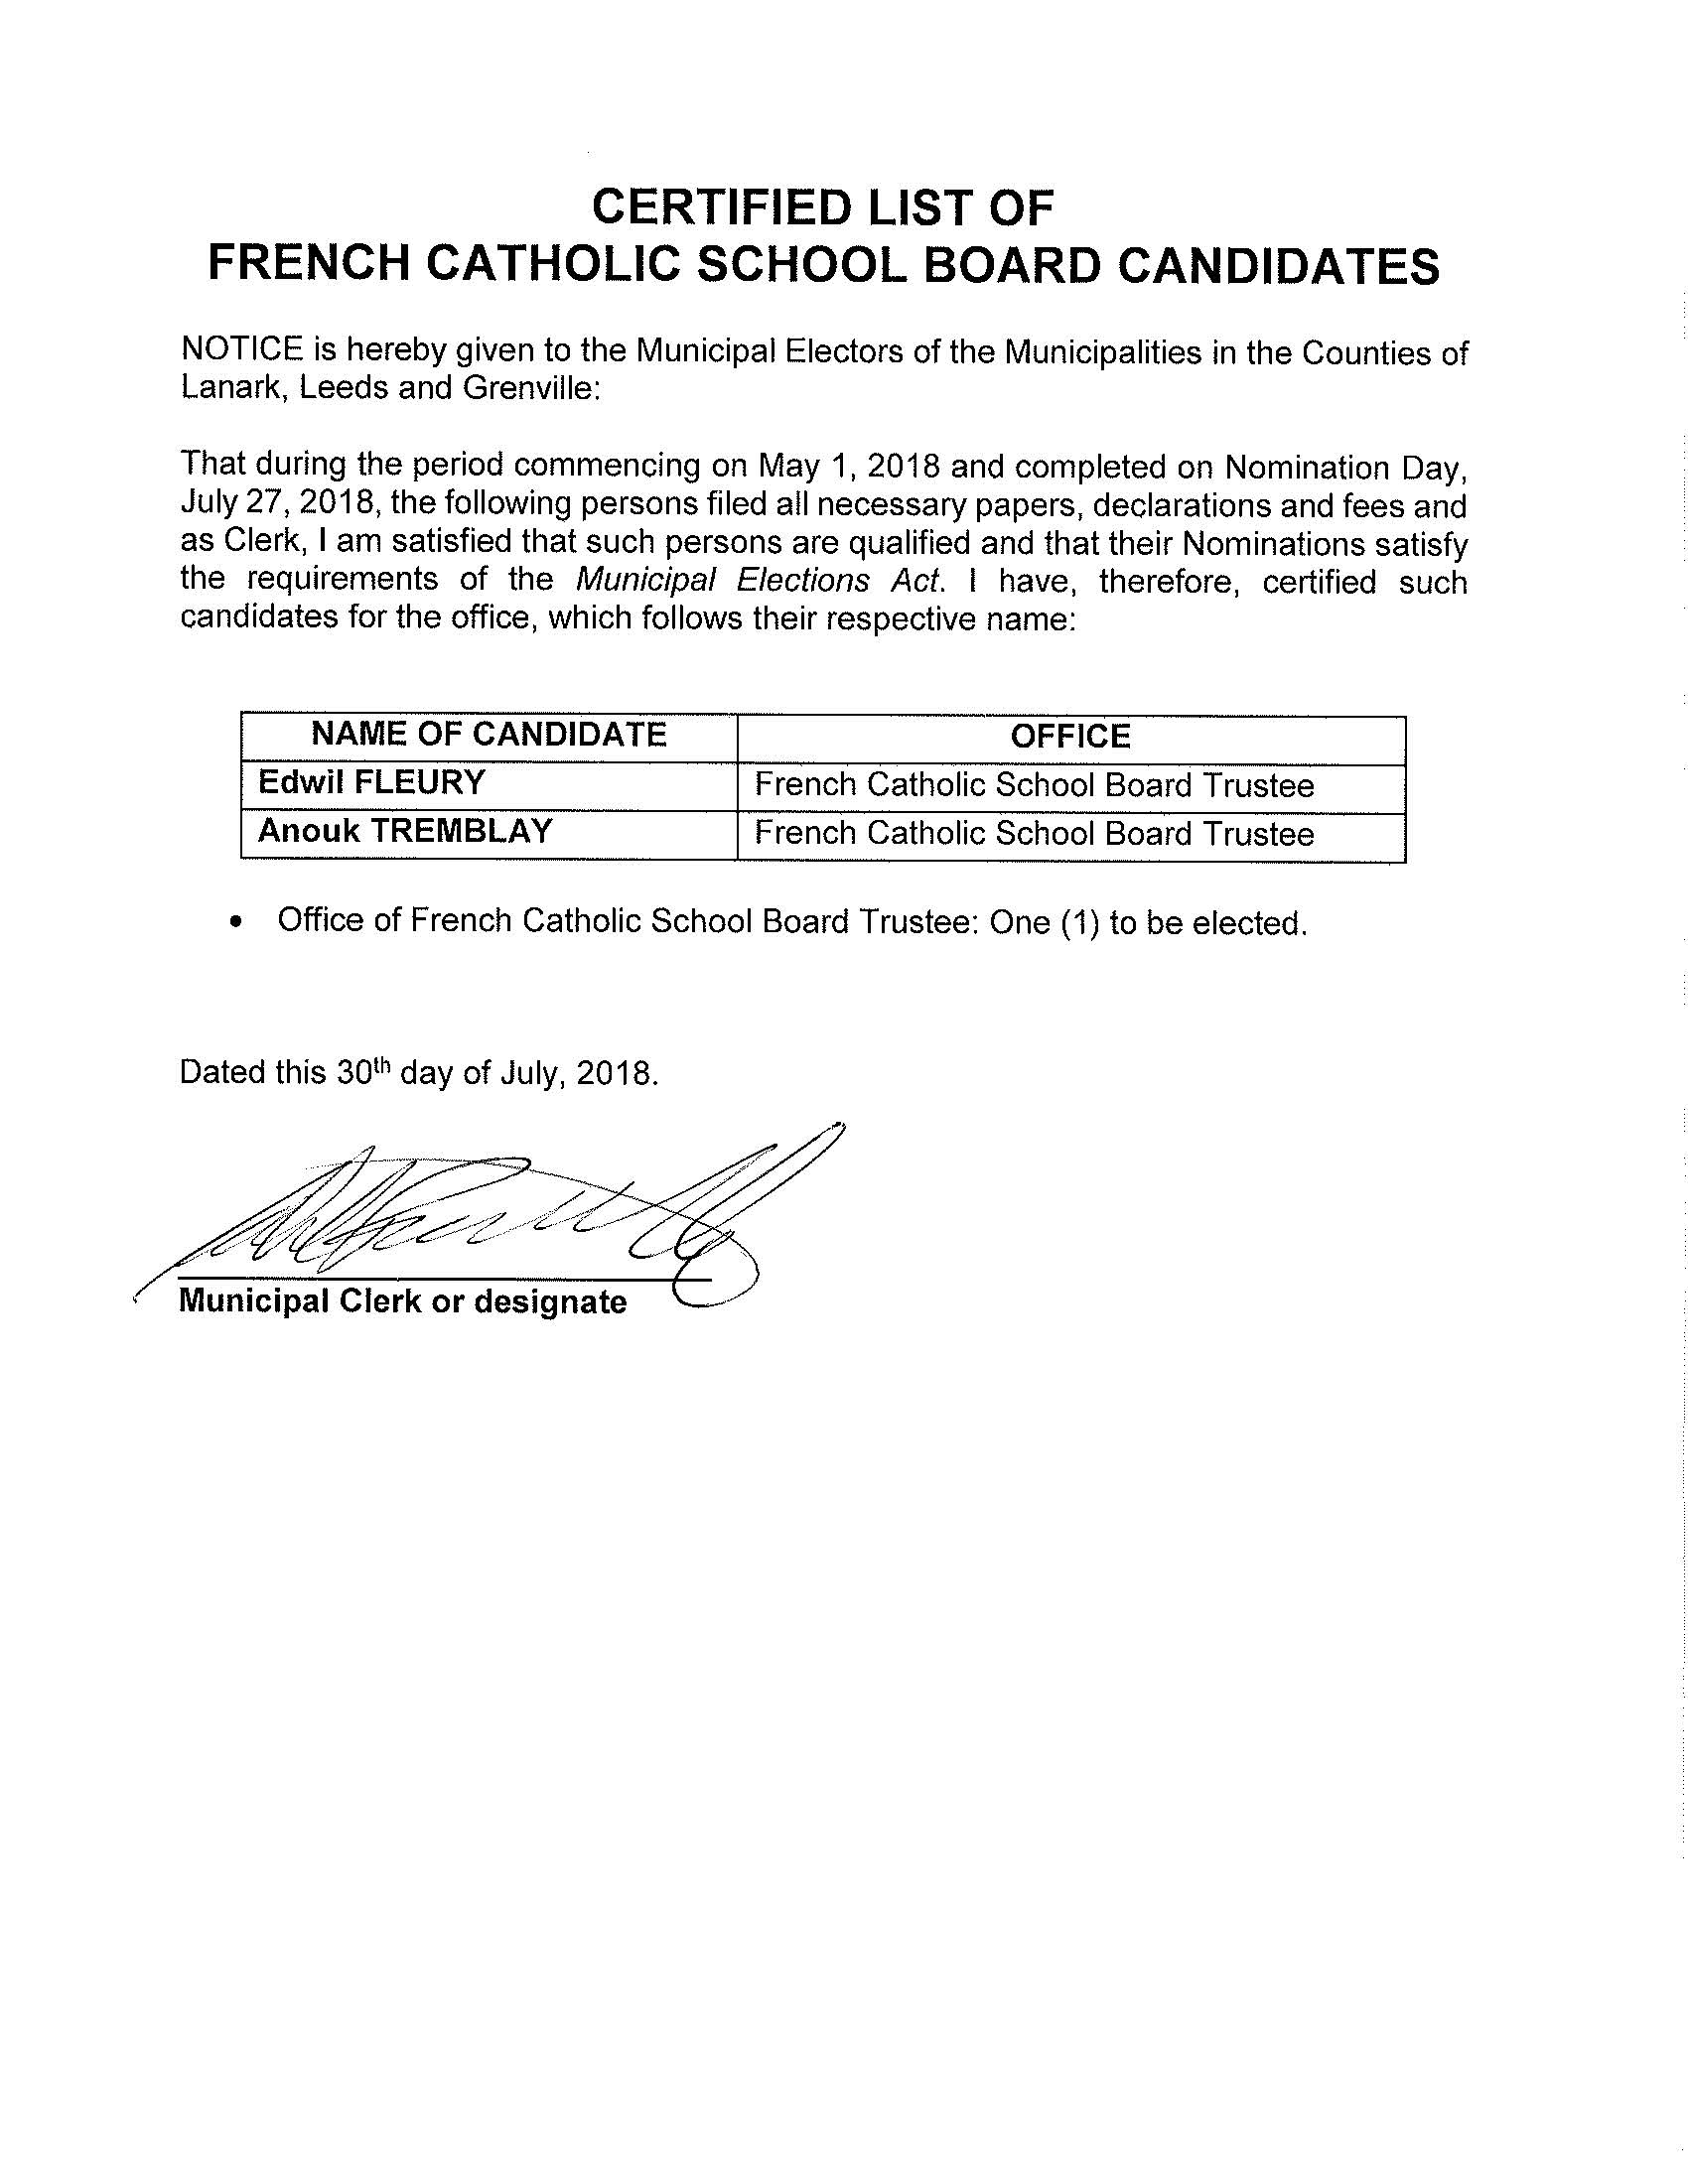 Certified List of Candidates - English Catholic School Board